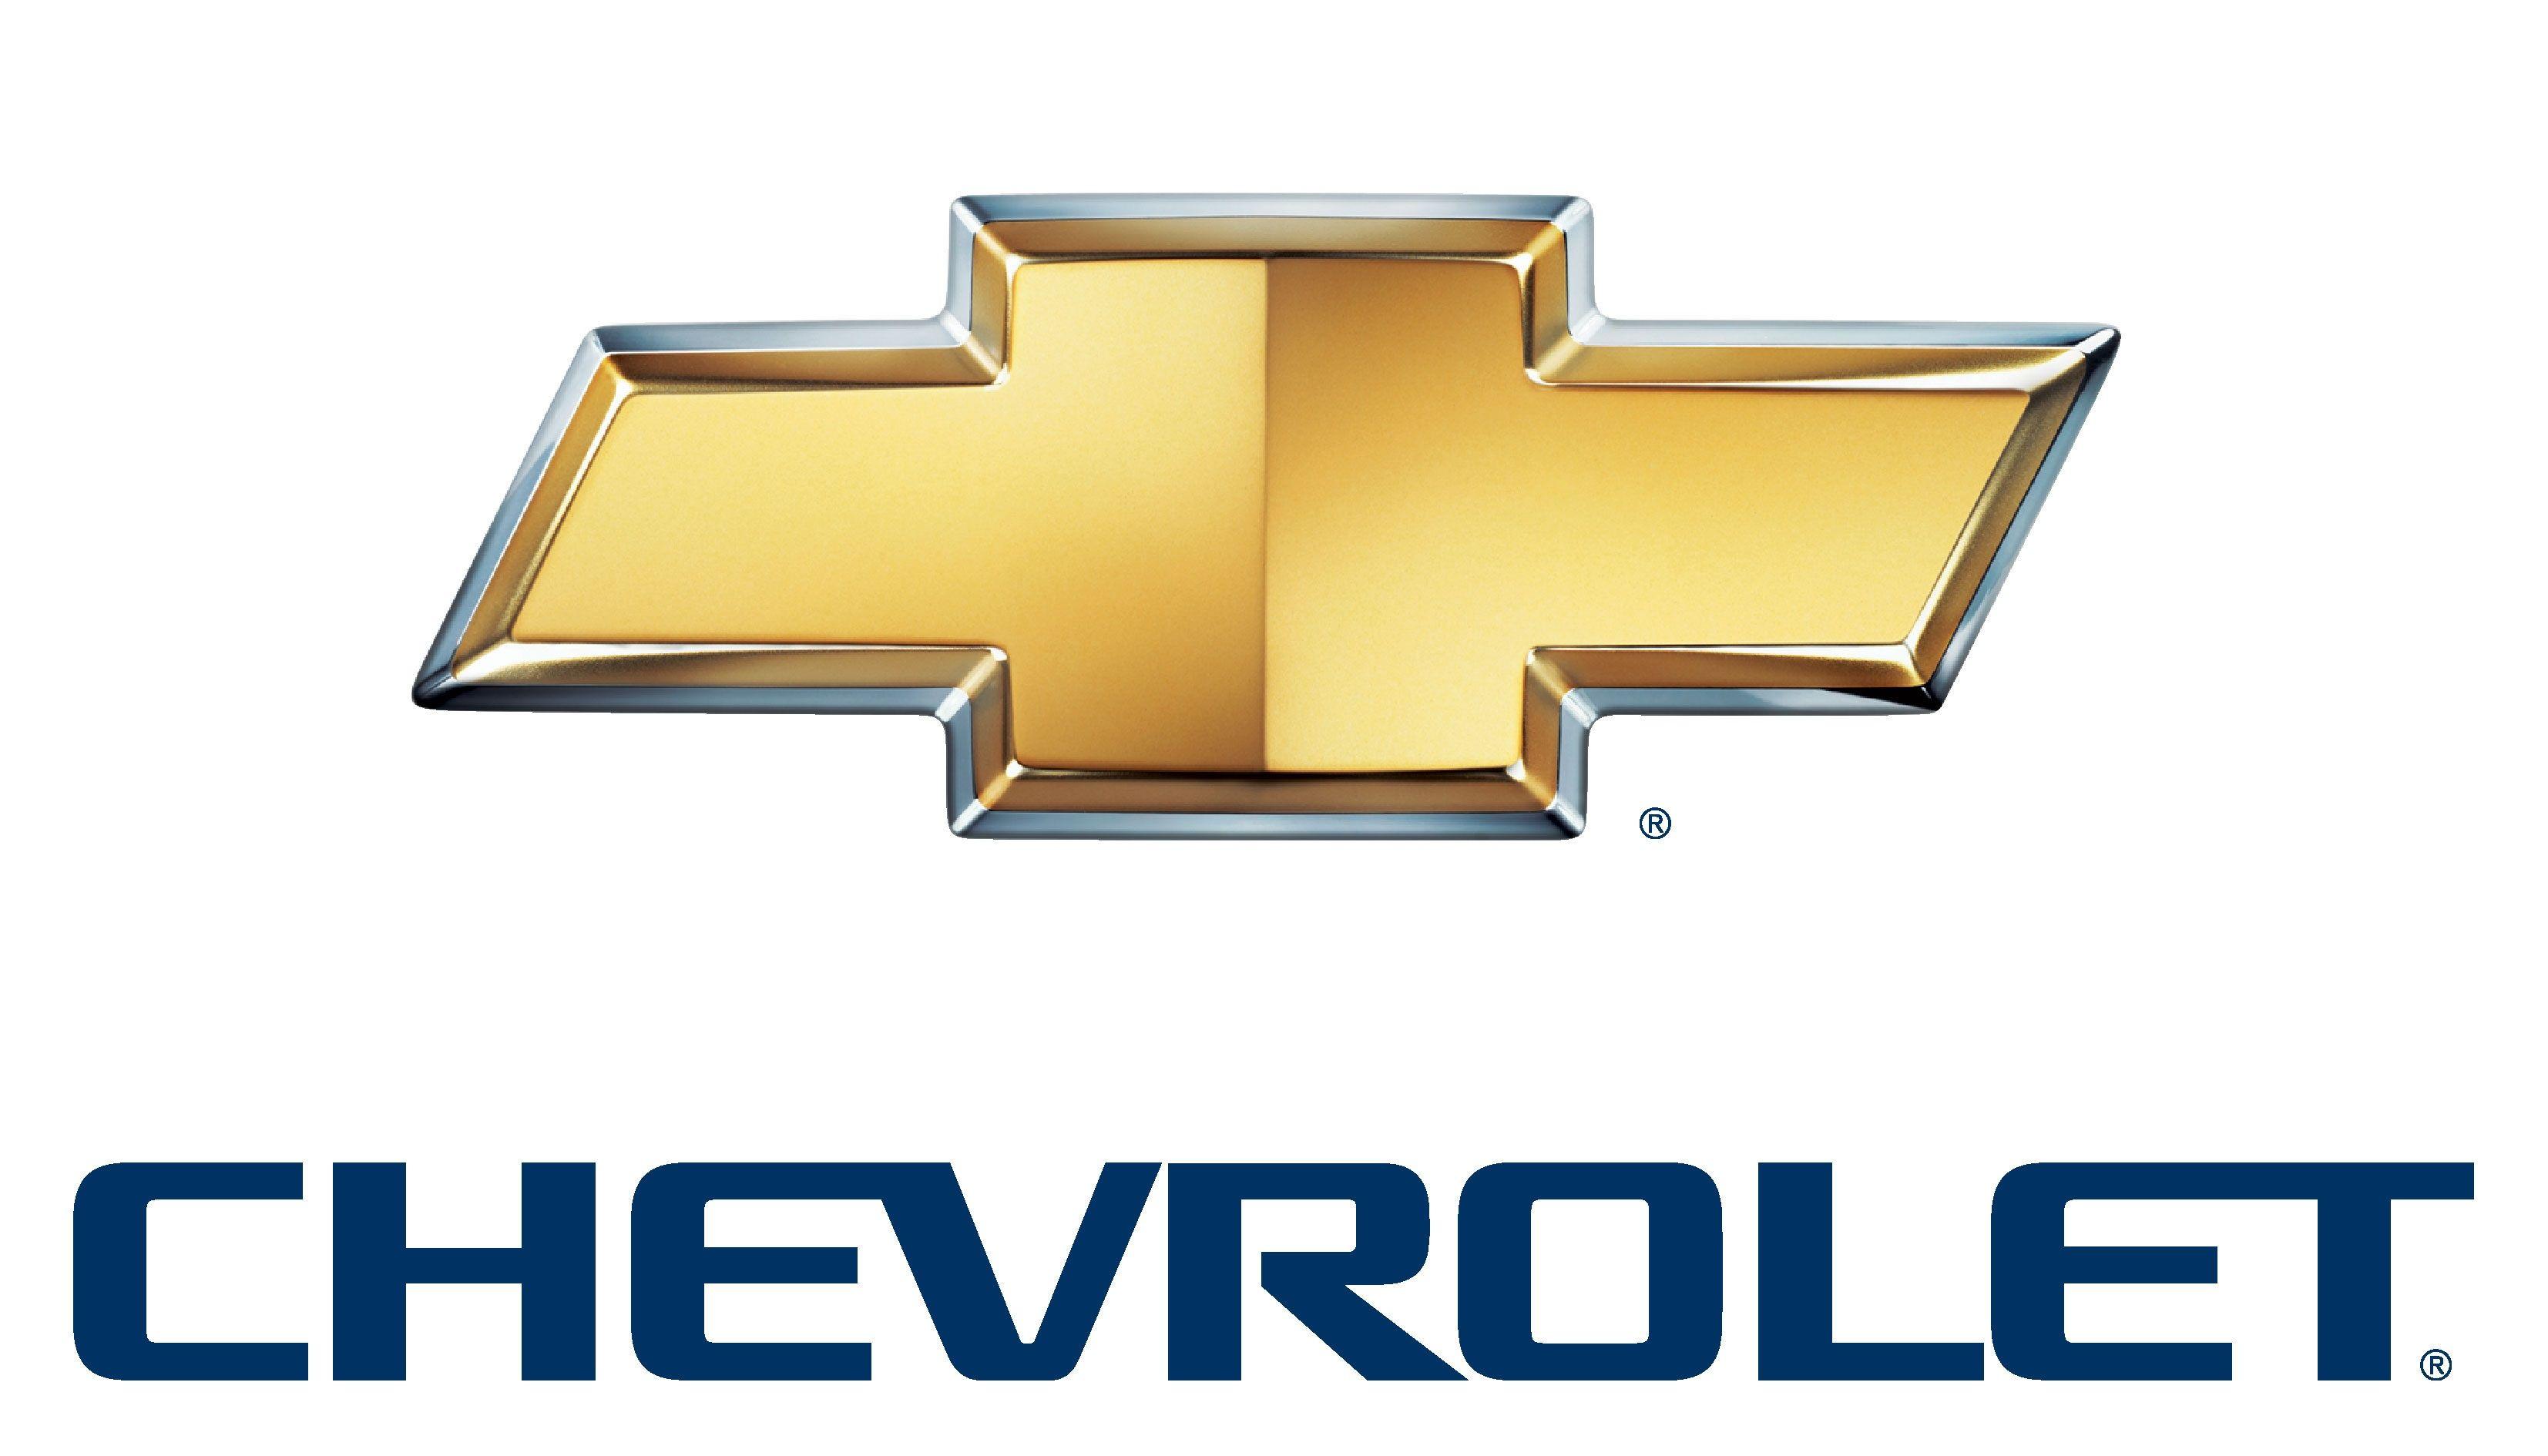 Chevrolet Logo - Image - Chevrolet logo.jpg | Logopedia | FANDOM powered by Wikia